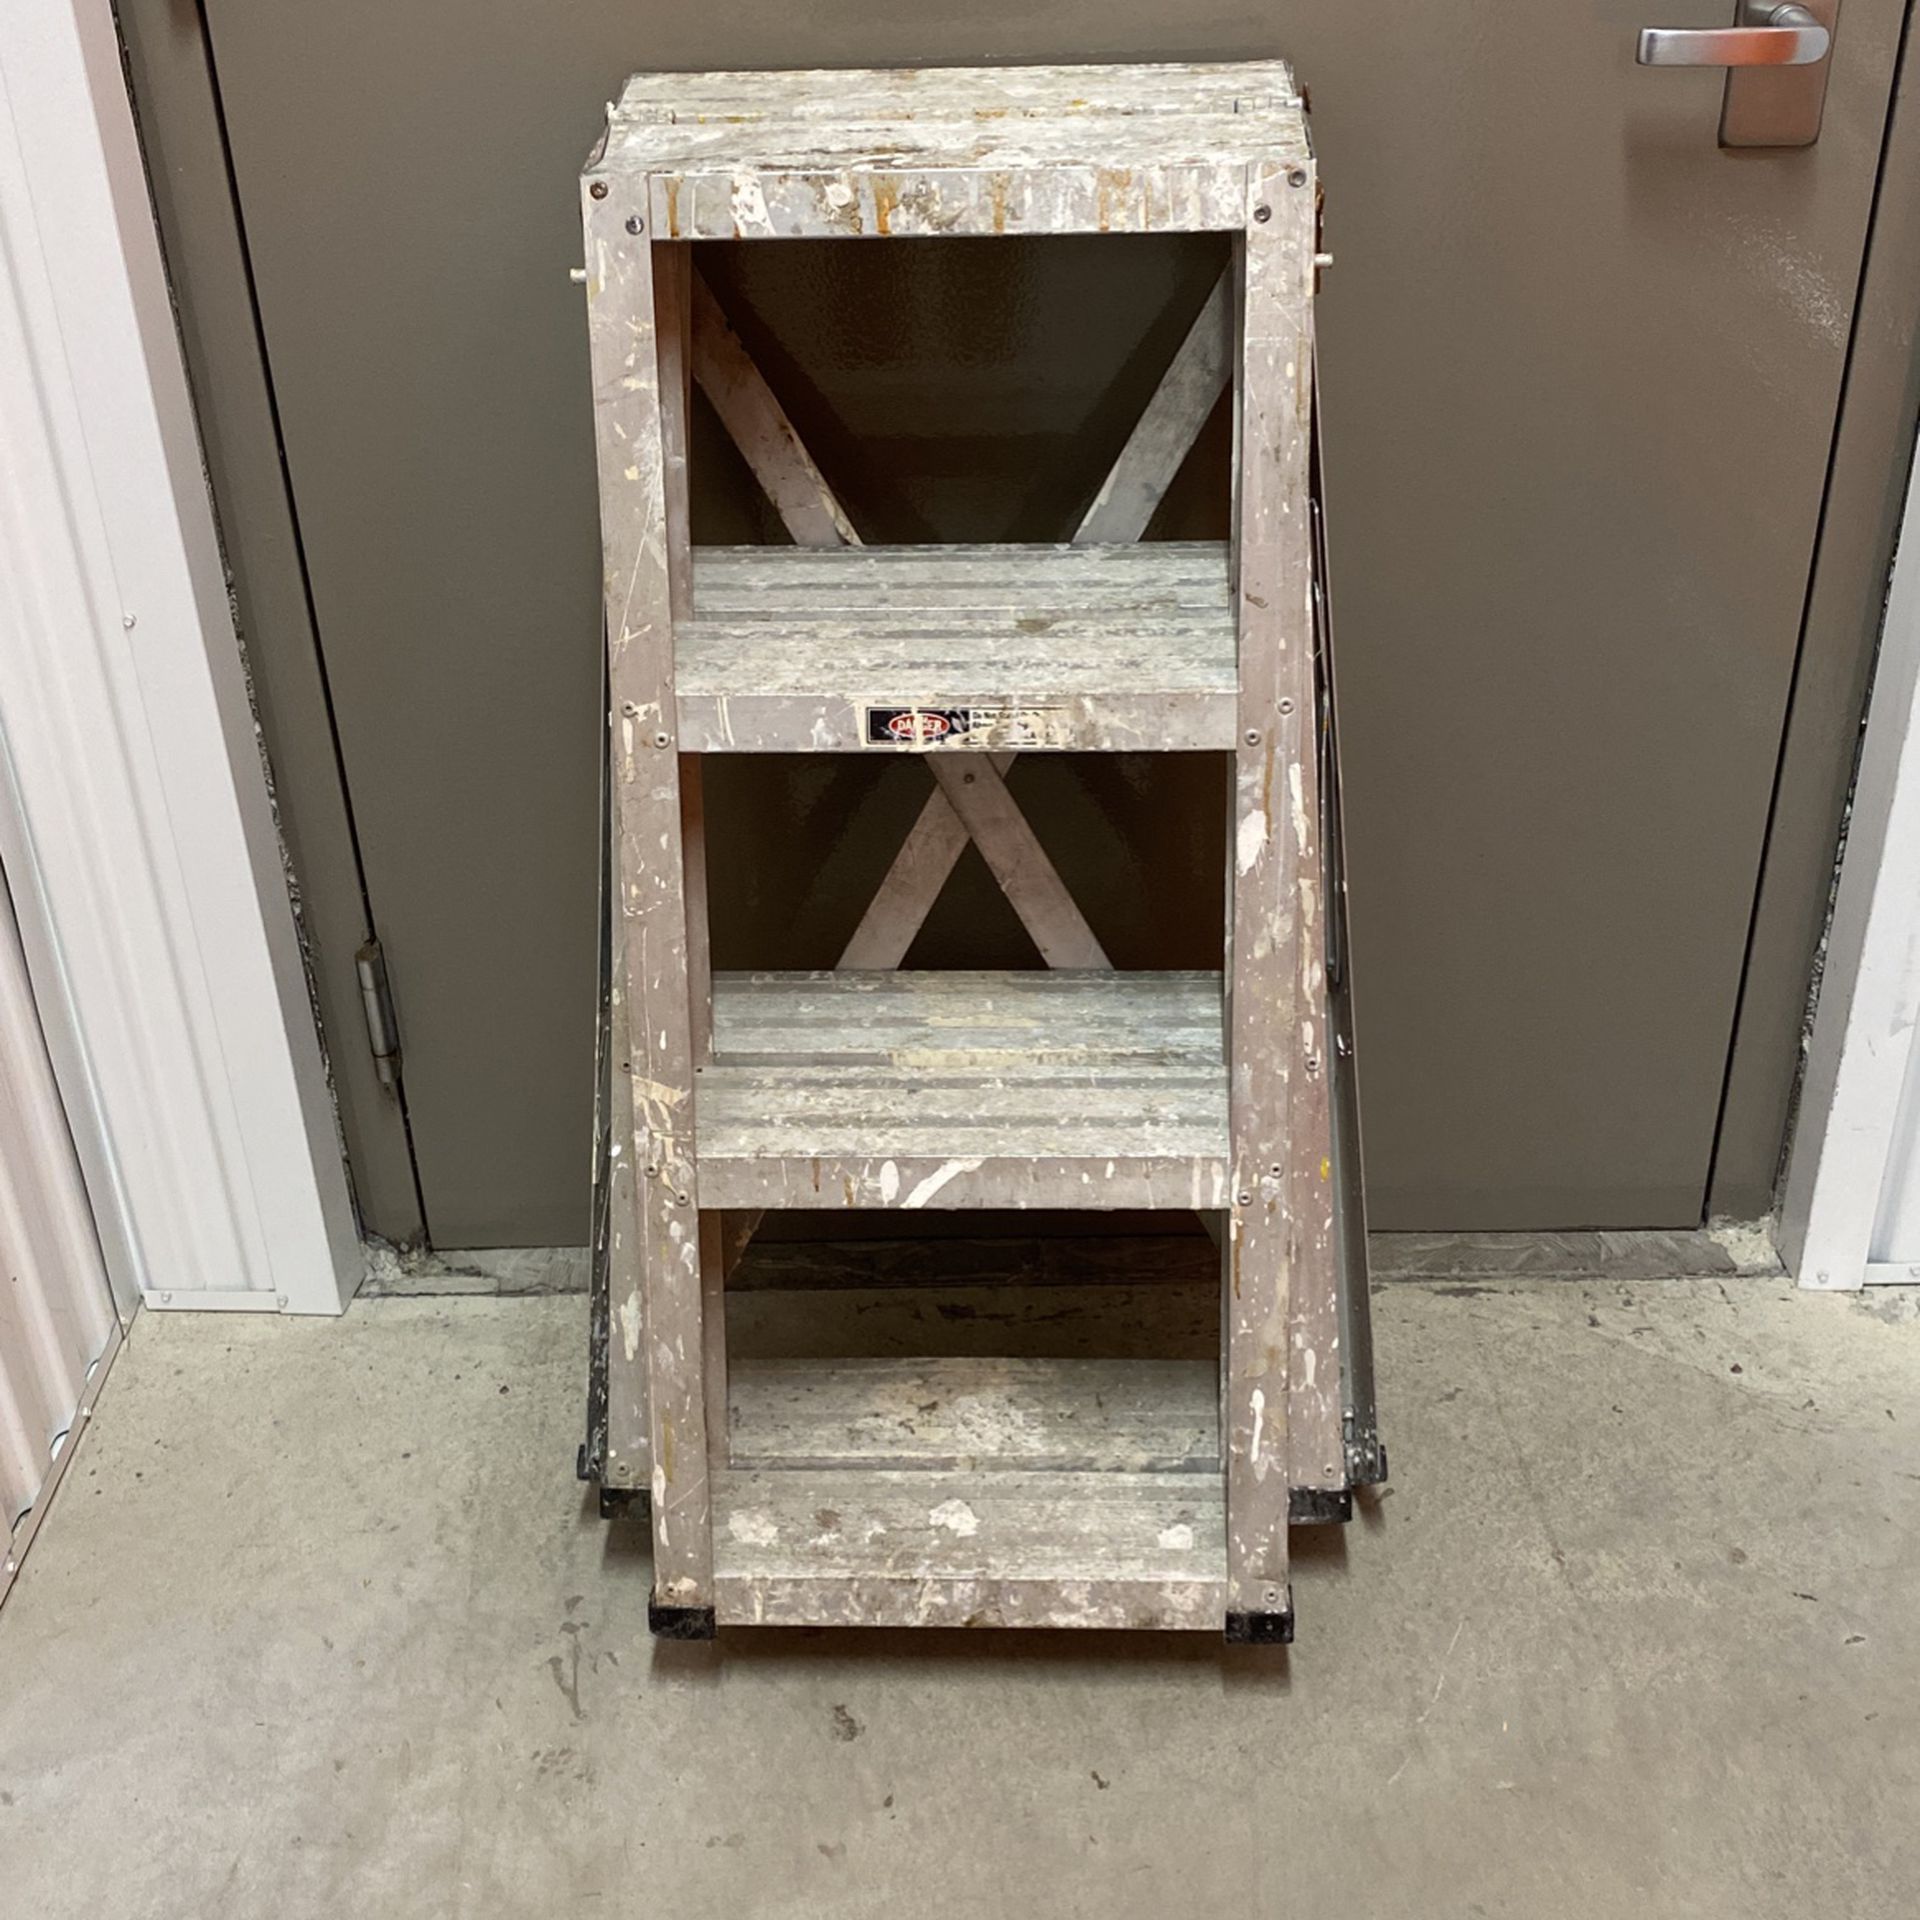 Lightweight 6’ Ladder/ Stepstool